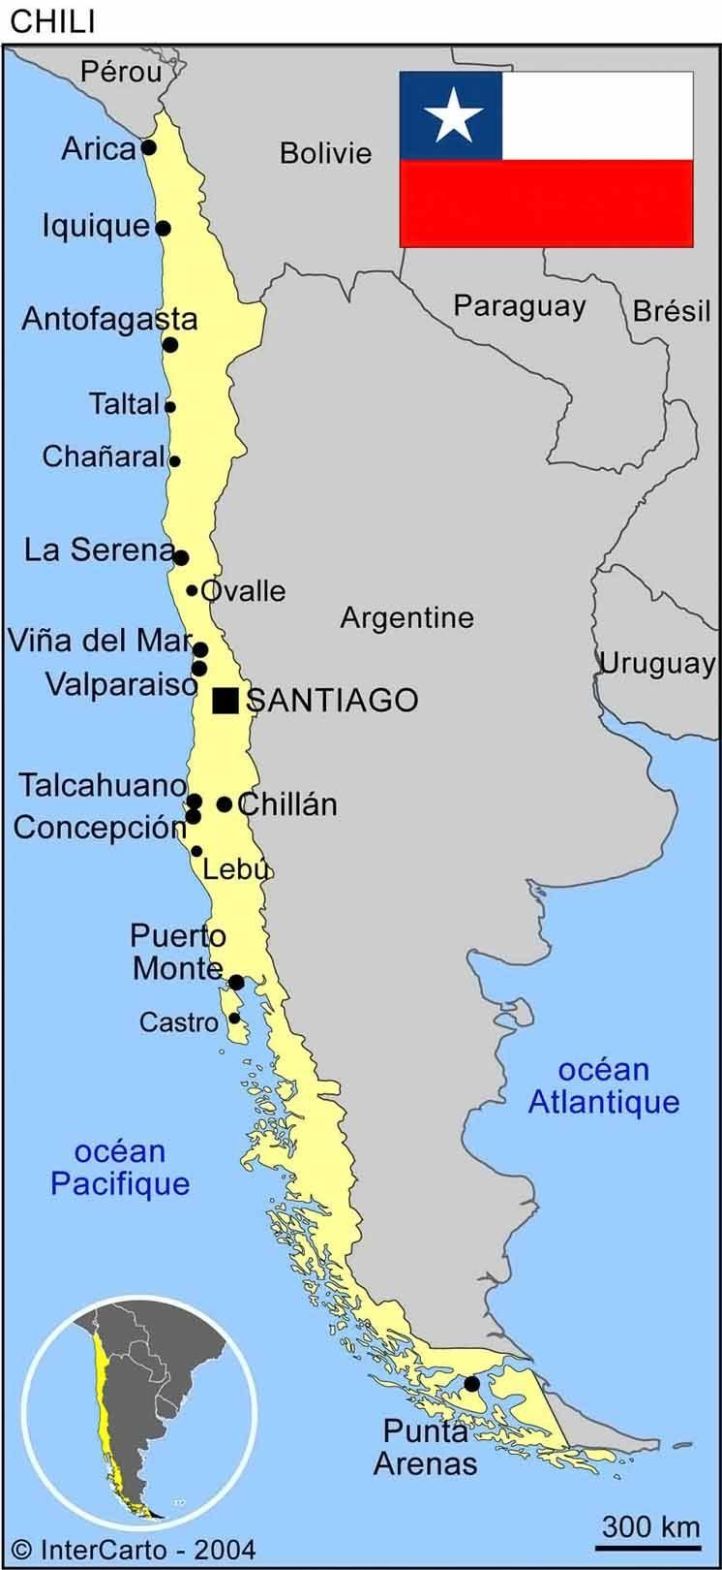 Chili - Map